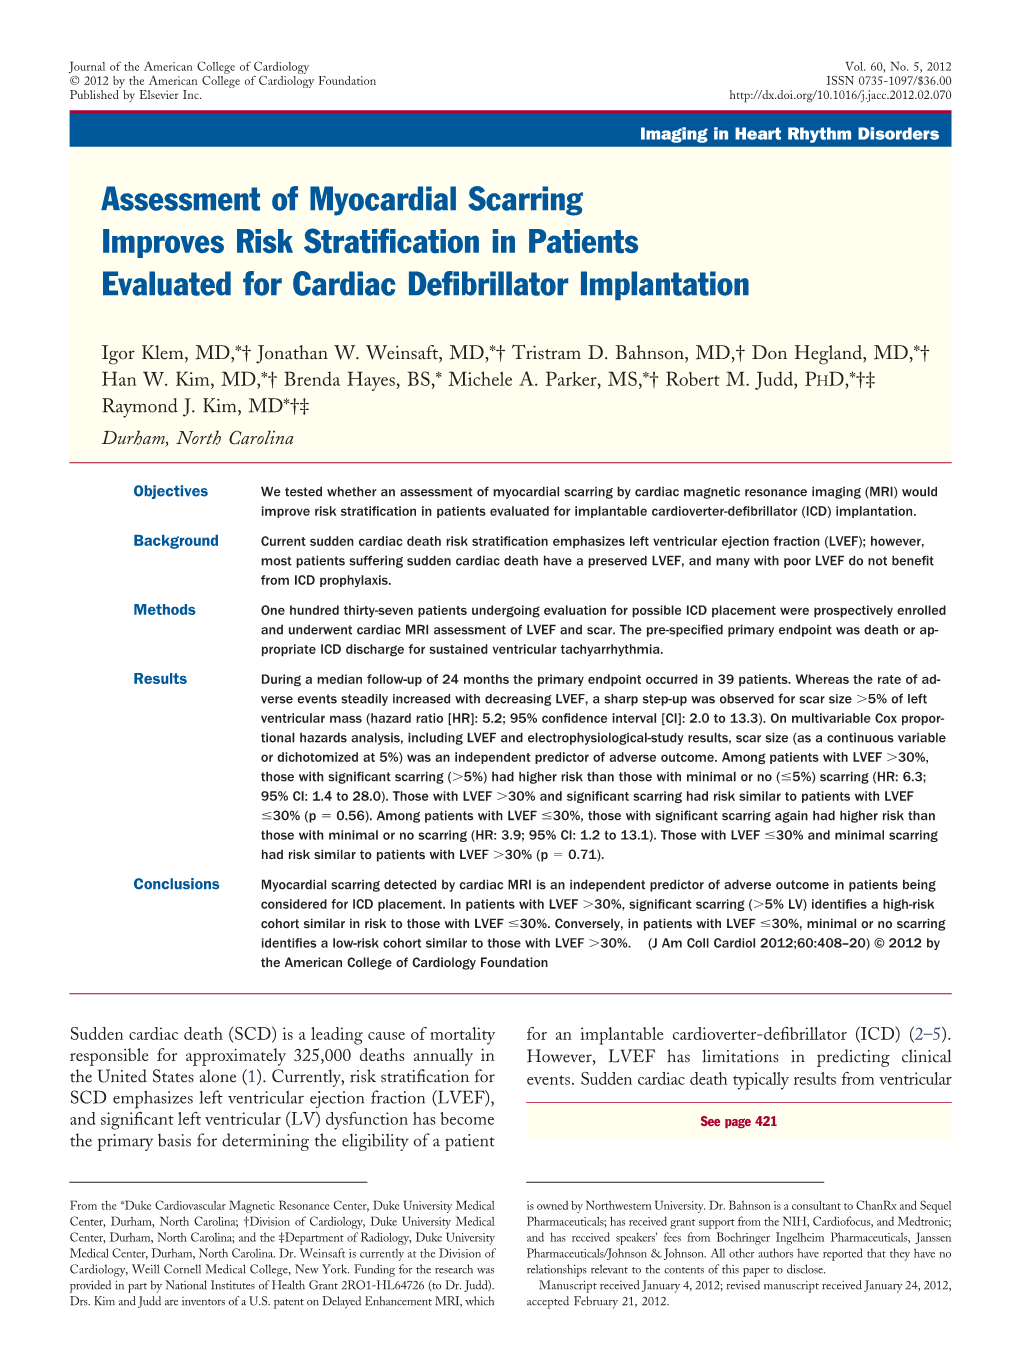 Assessment of Myocardial Scarring Improves Risk Stratification In